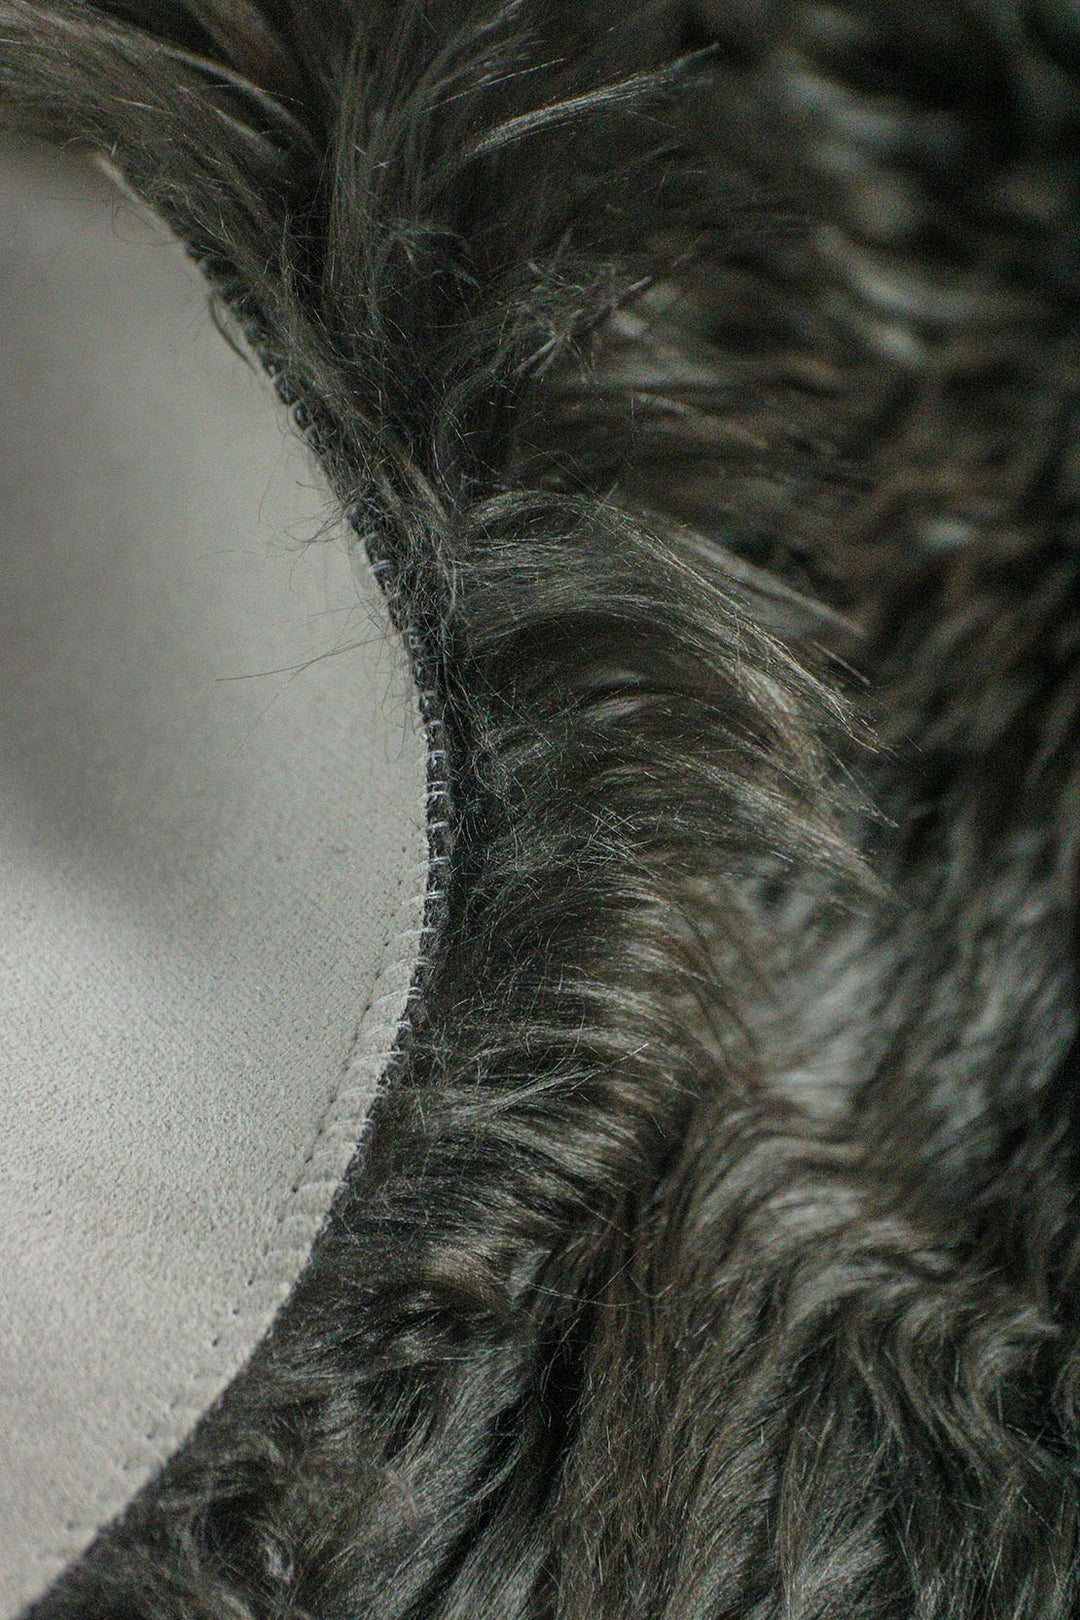 Wild Life (Sheep Fur) - 3.2 x 4.9 FT - Dark Gray - Luxuriously Soft Fluffy Rug